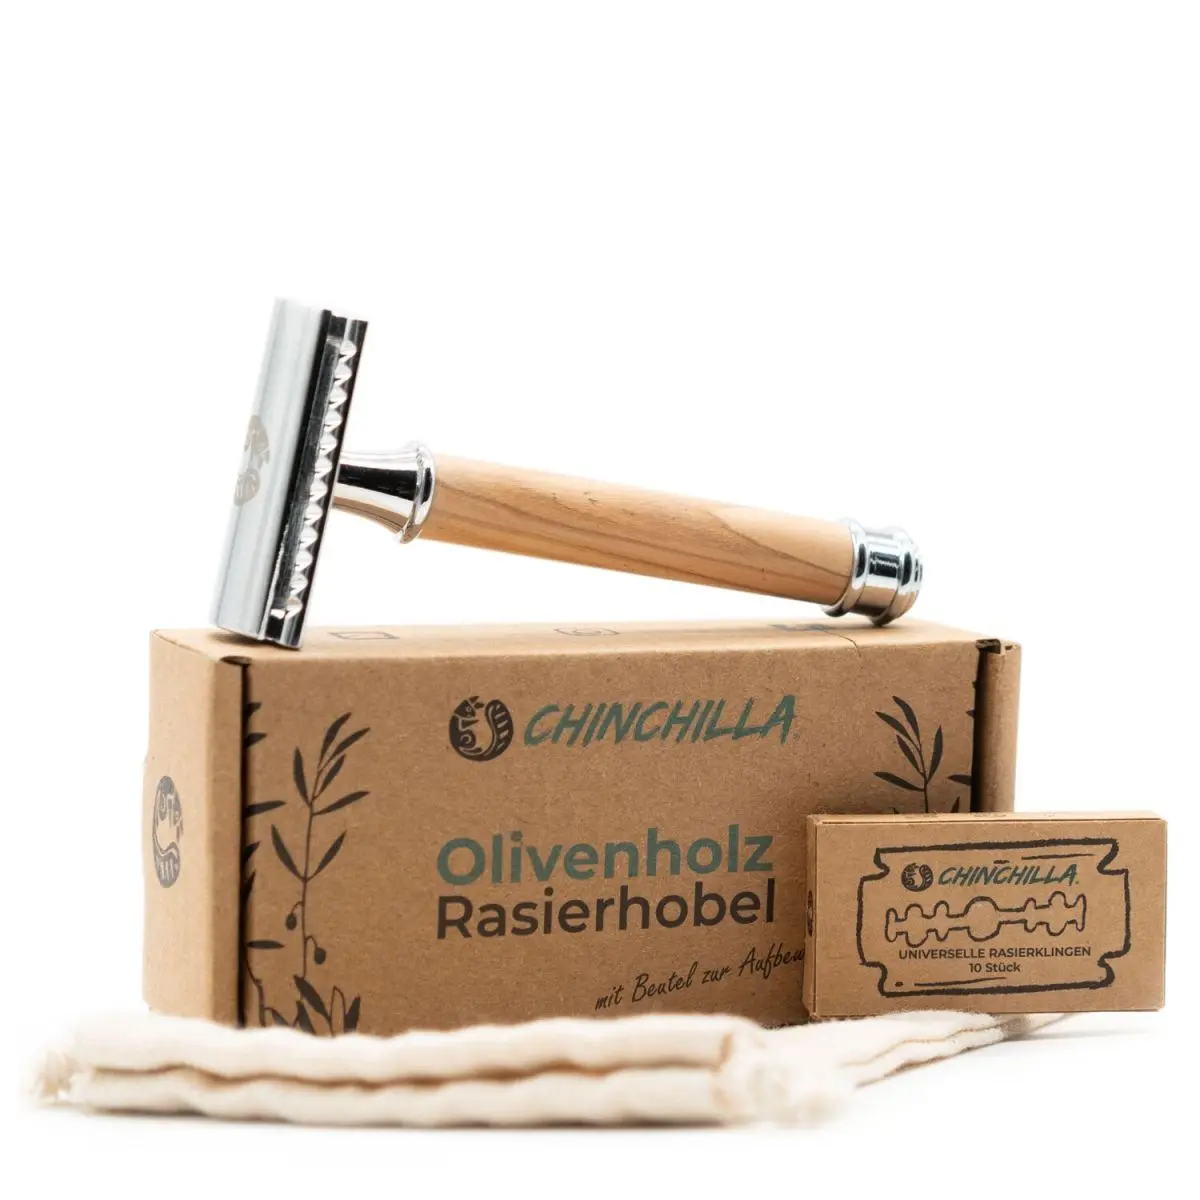 Chinchilla - Rasierhobel - aus Olivenholz und Metall